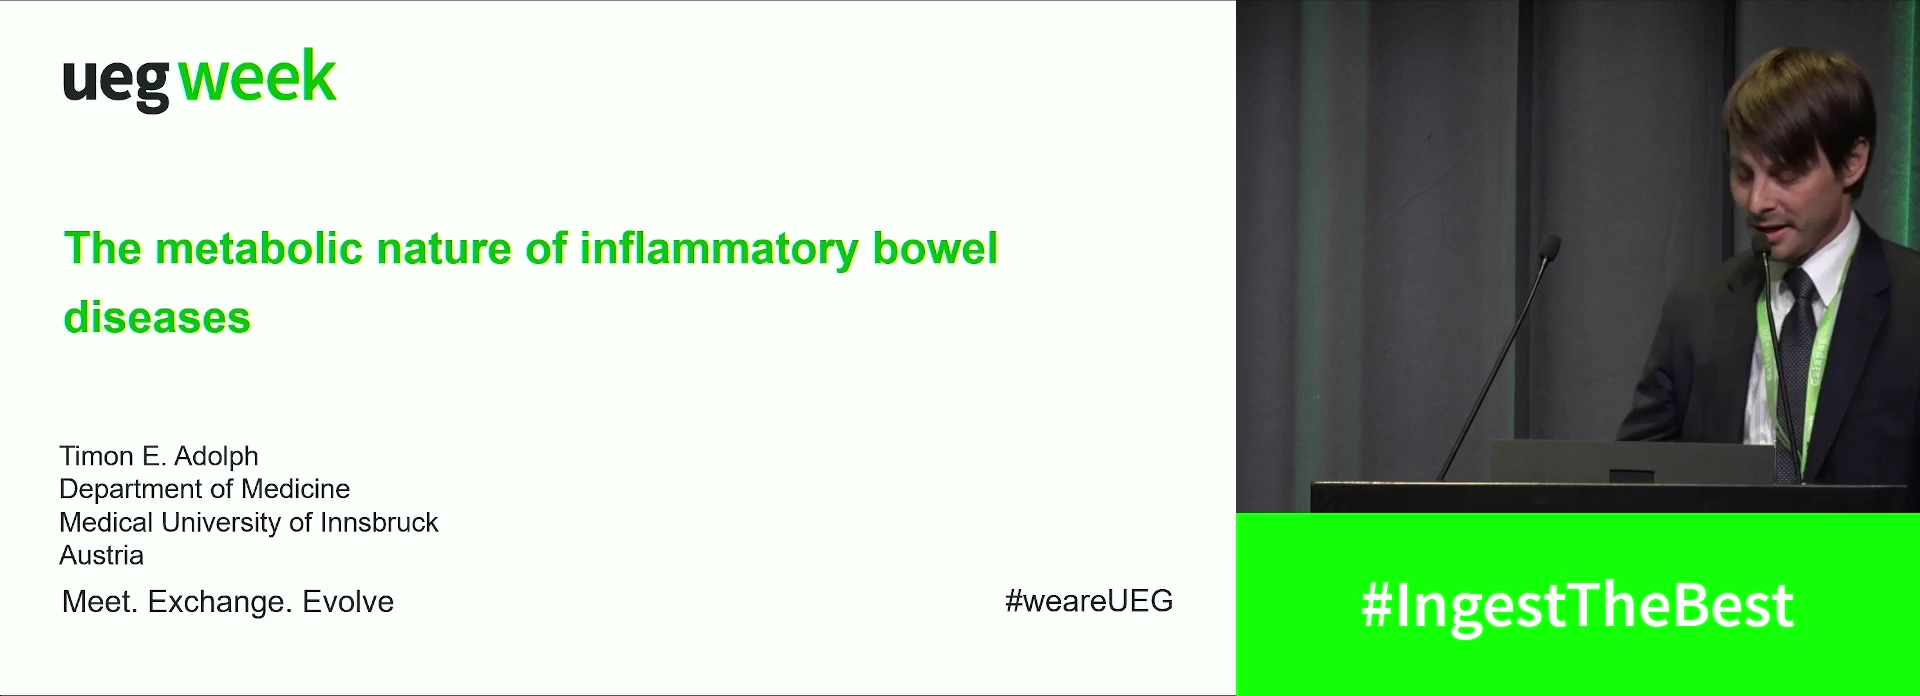 The metabolic nature of inflammatory bowel diseases